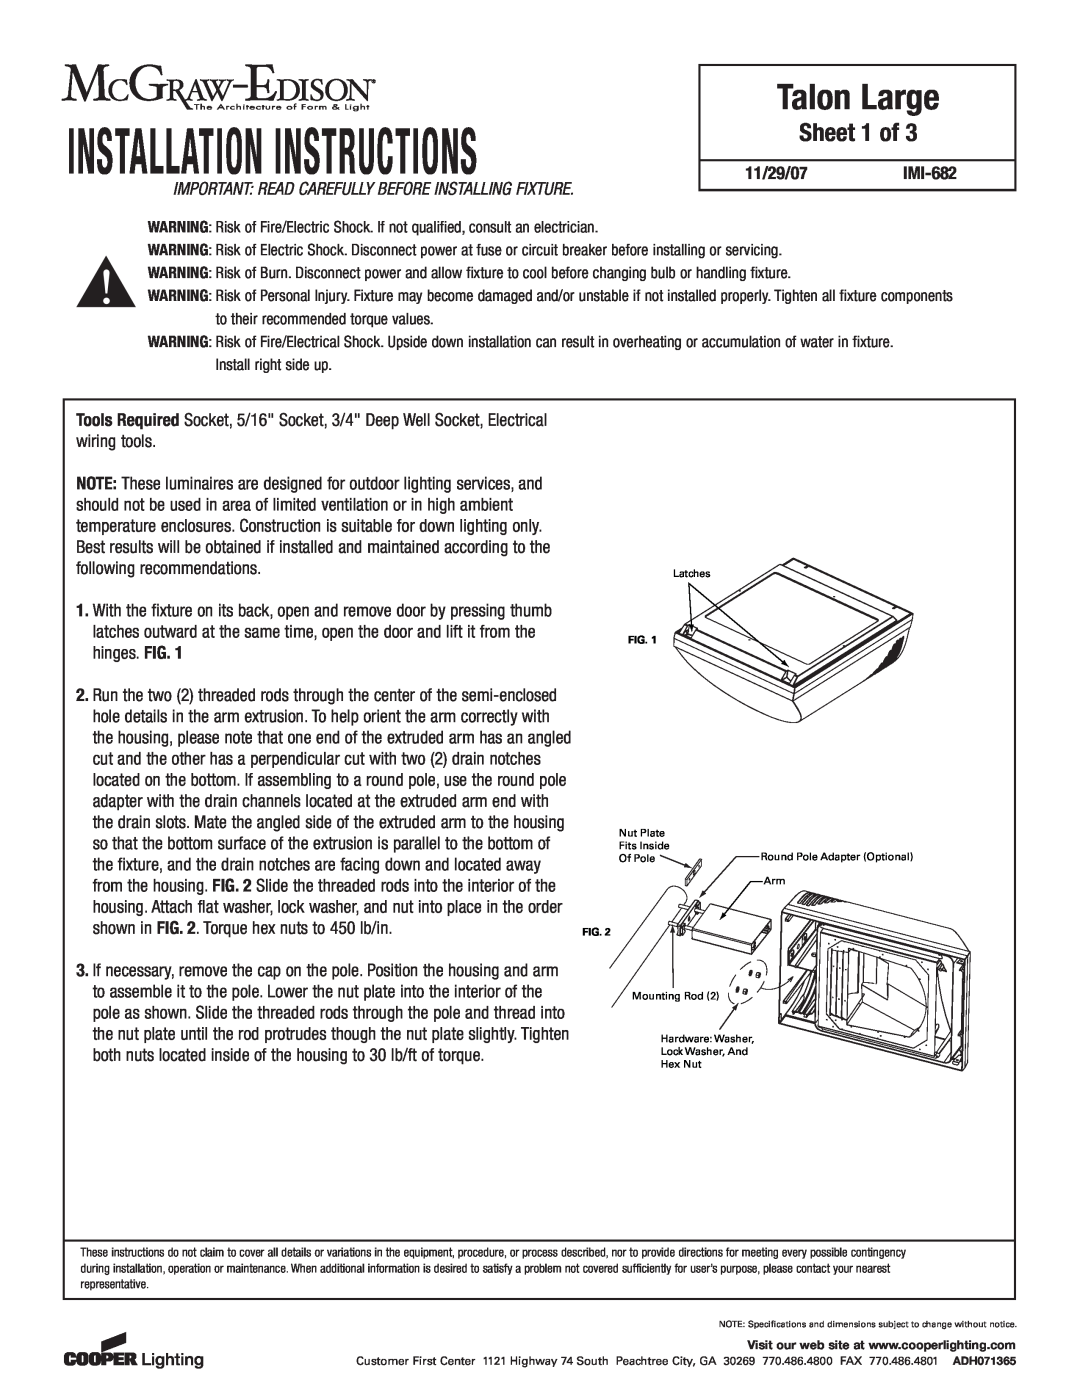 Cooper Lighting IMI-682 installation instructions Installation Instructions, Talon Large, Sheet 1 of 